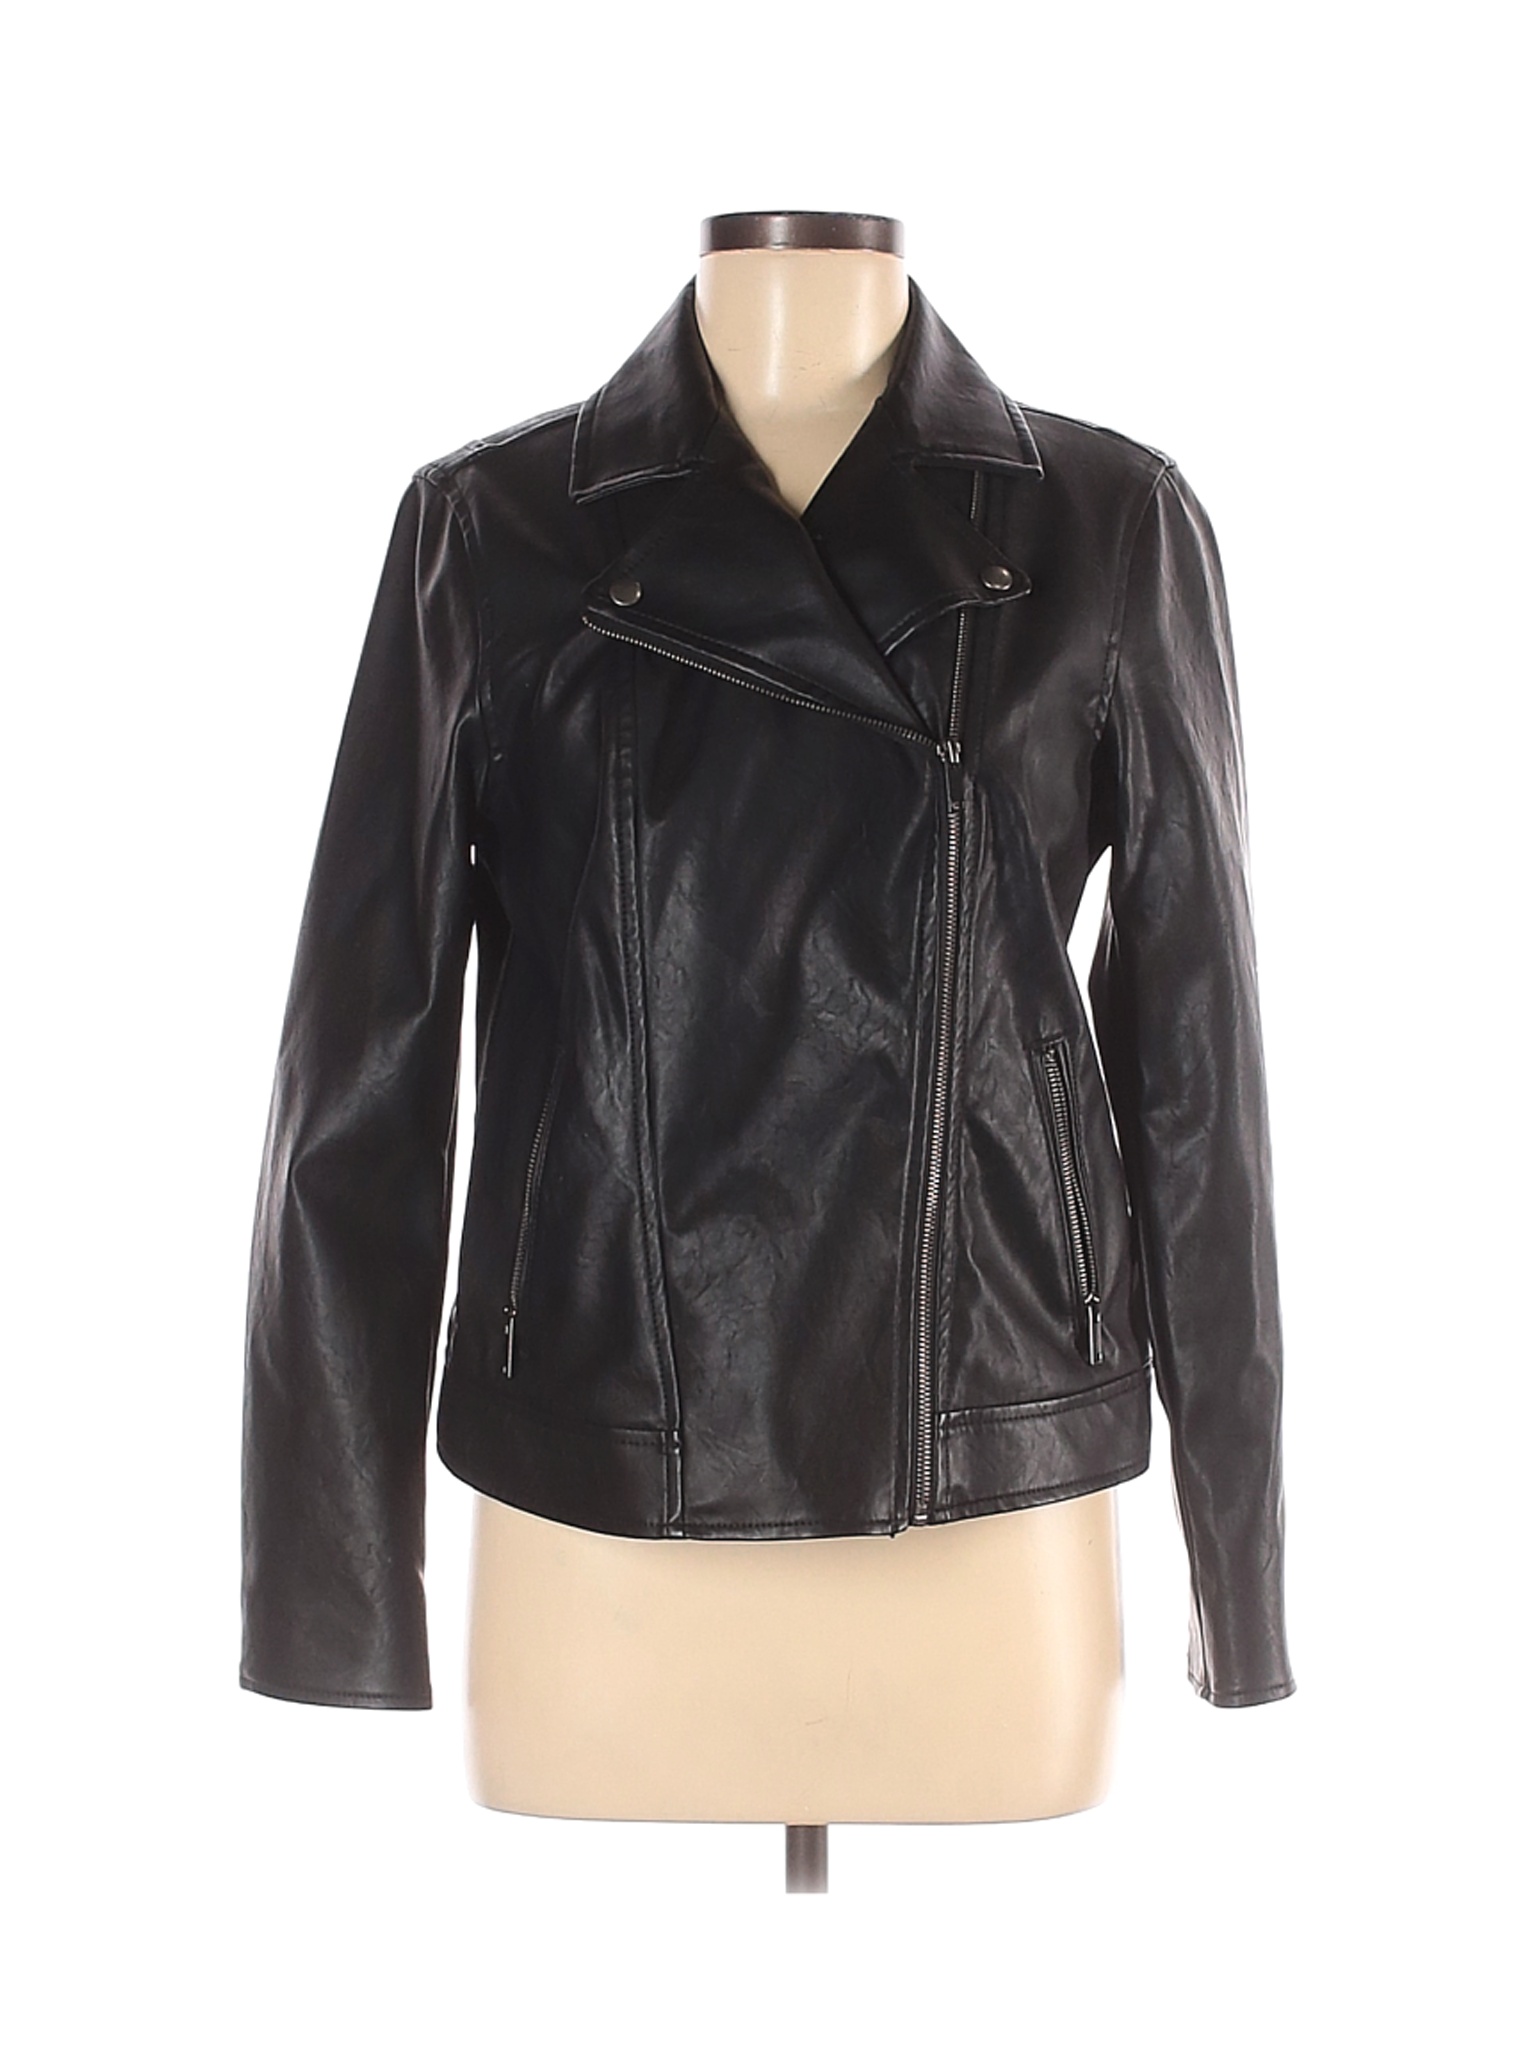 Old Navy Women Black Faux Leather Jacket M | eBay